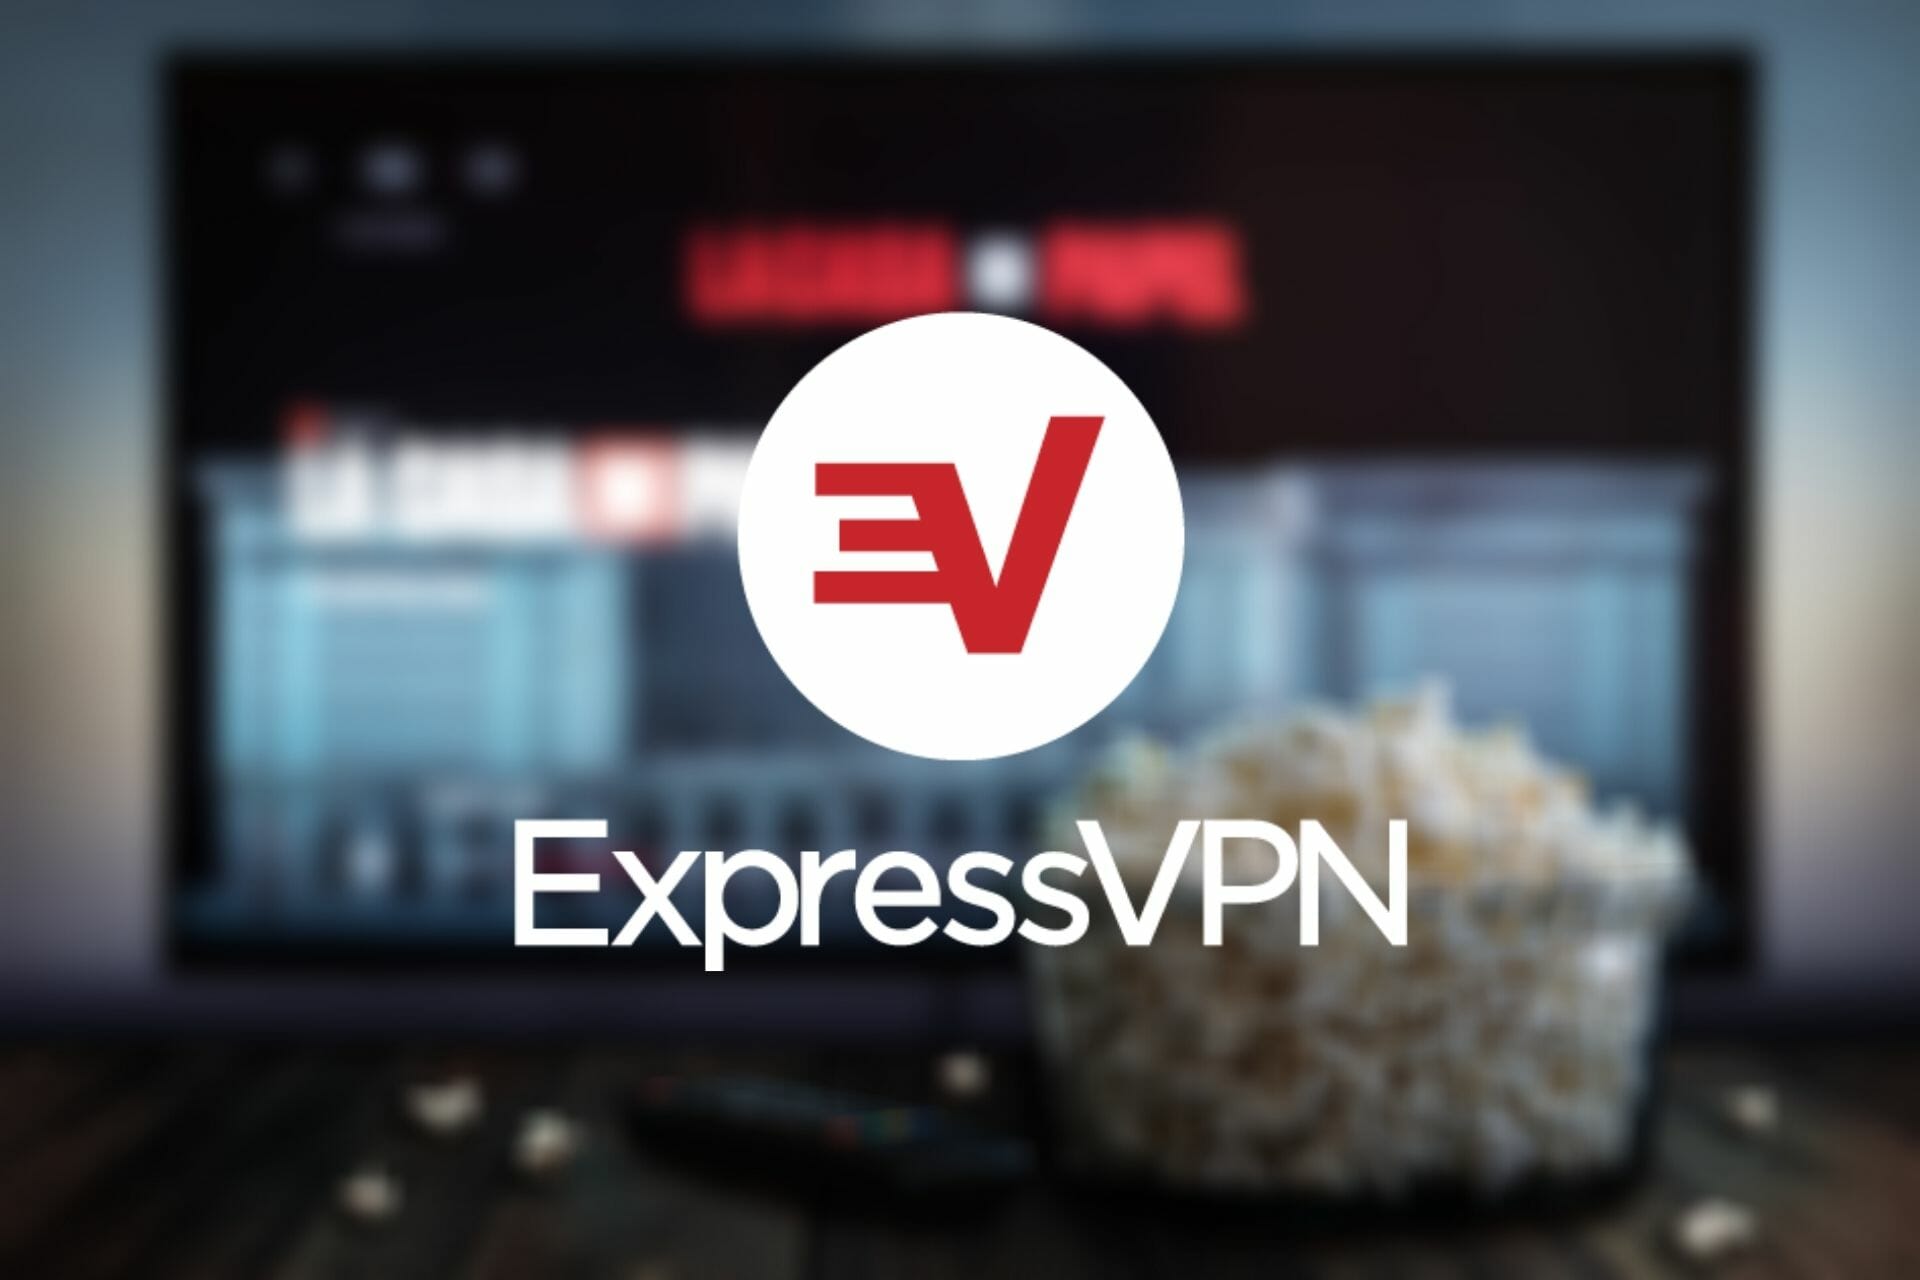 Use Express VPN with Netflix